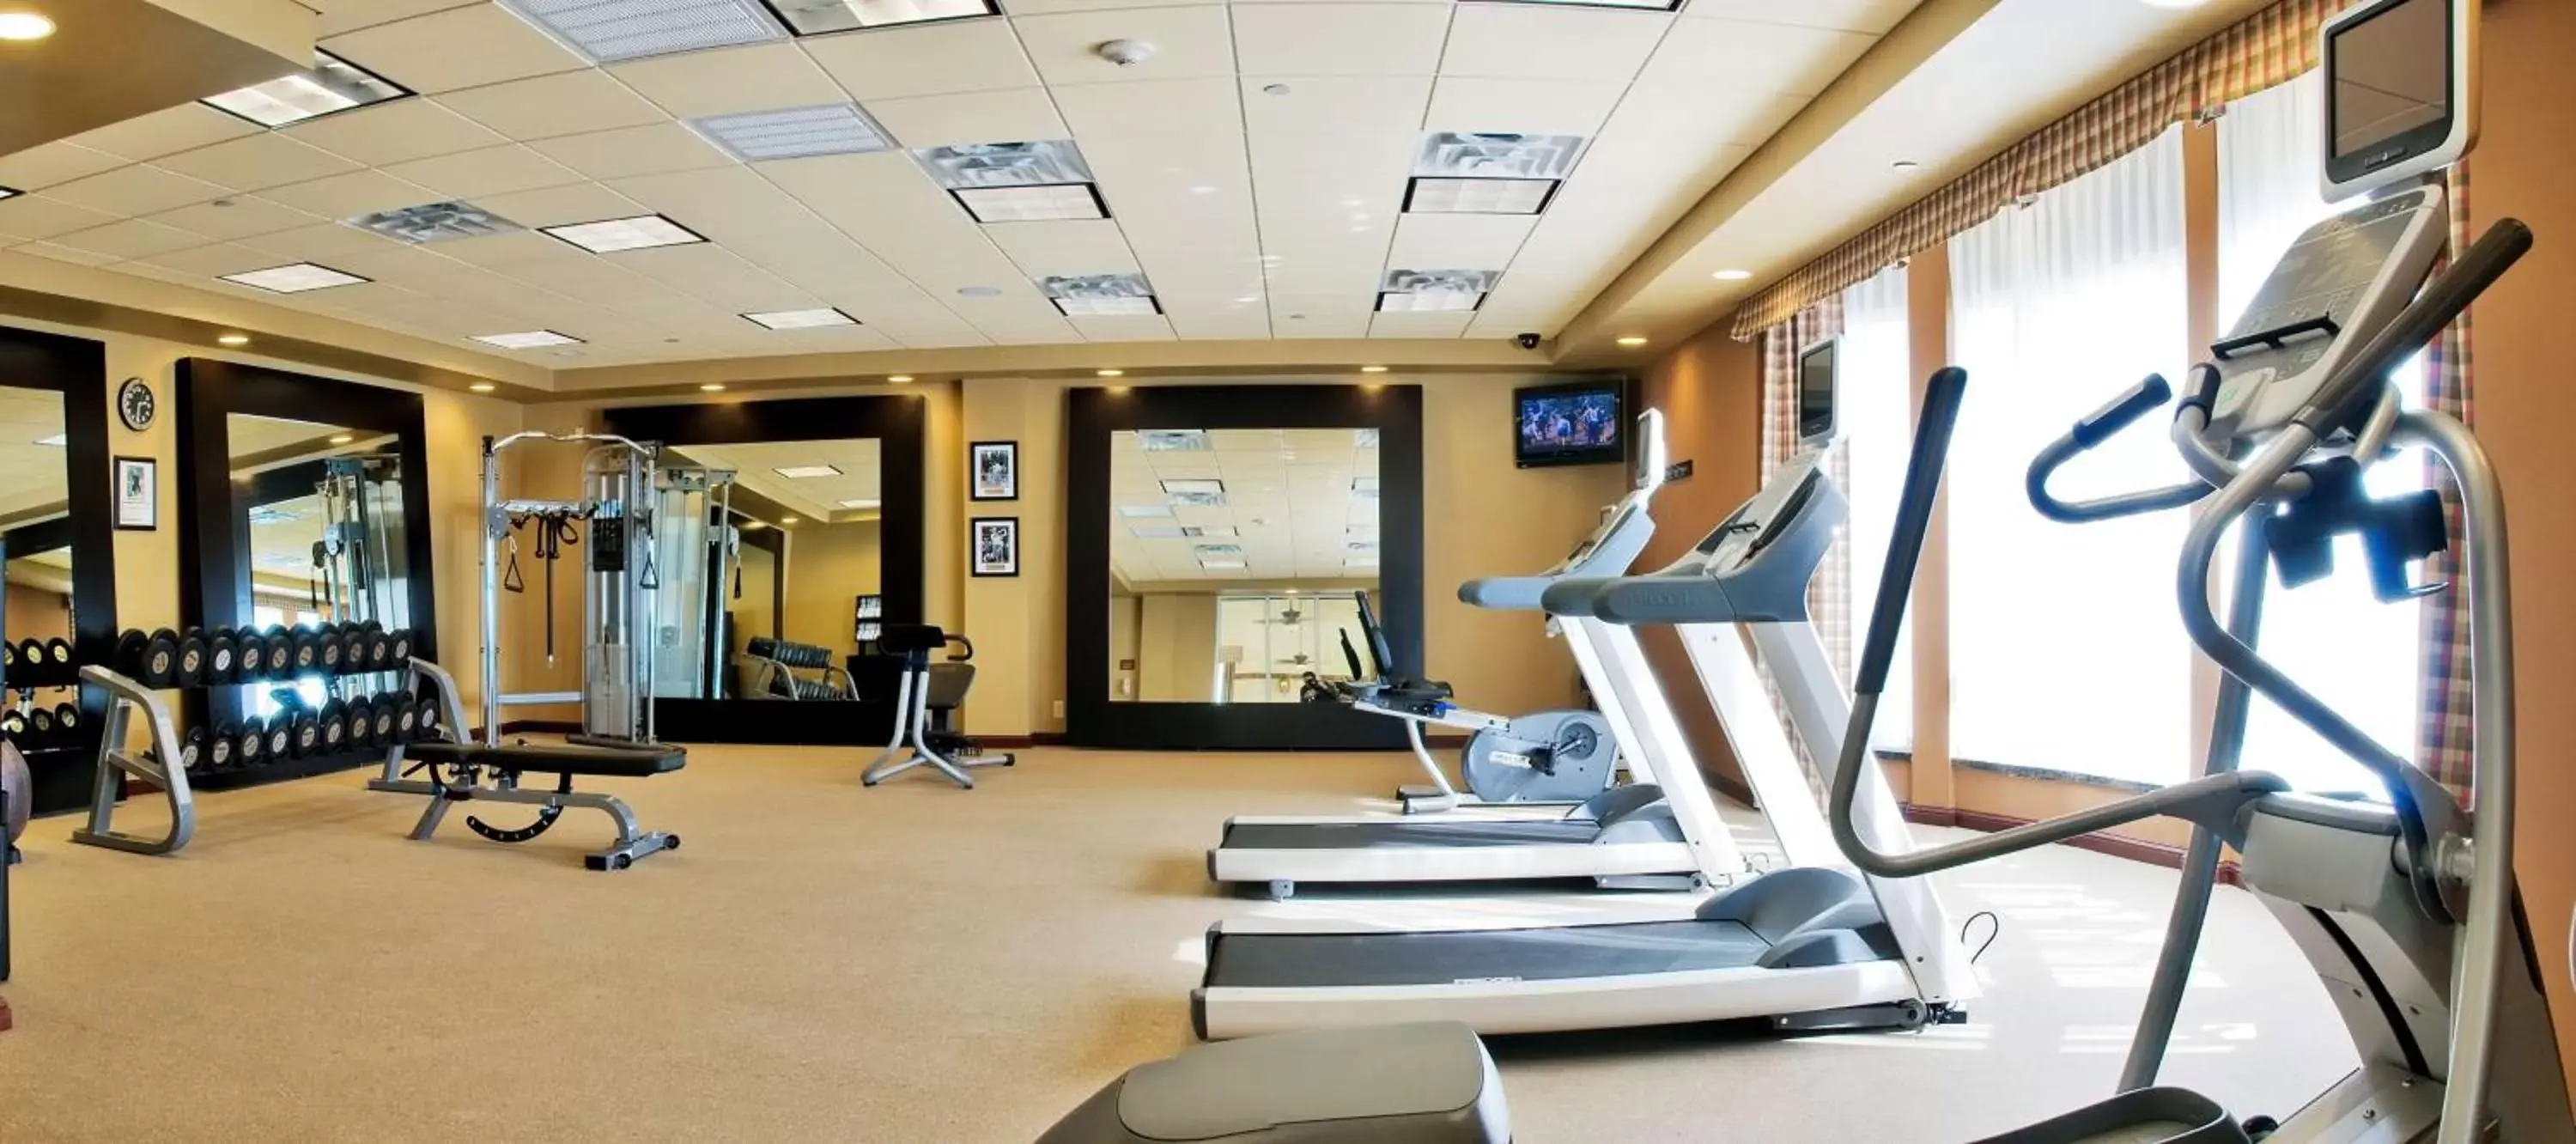 Fitness centre/facilities, Fitness Center/Facilities in Hilton Garden Inn Amarillo